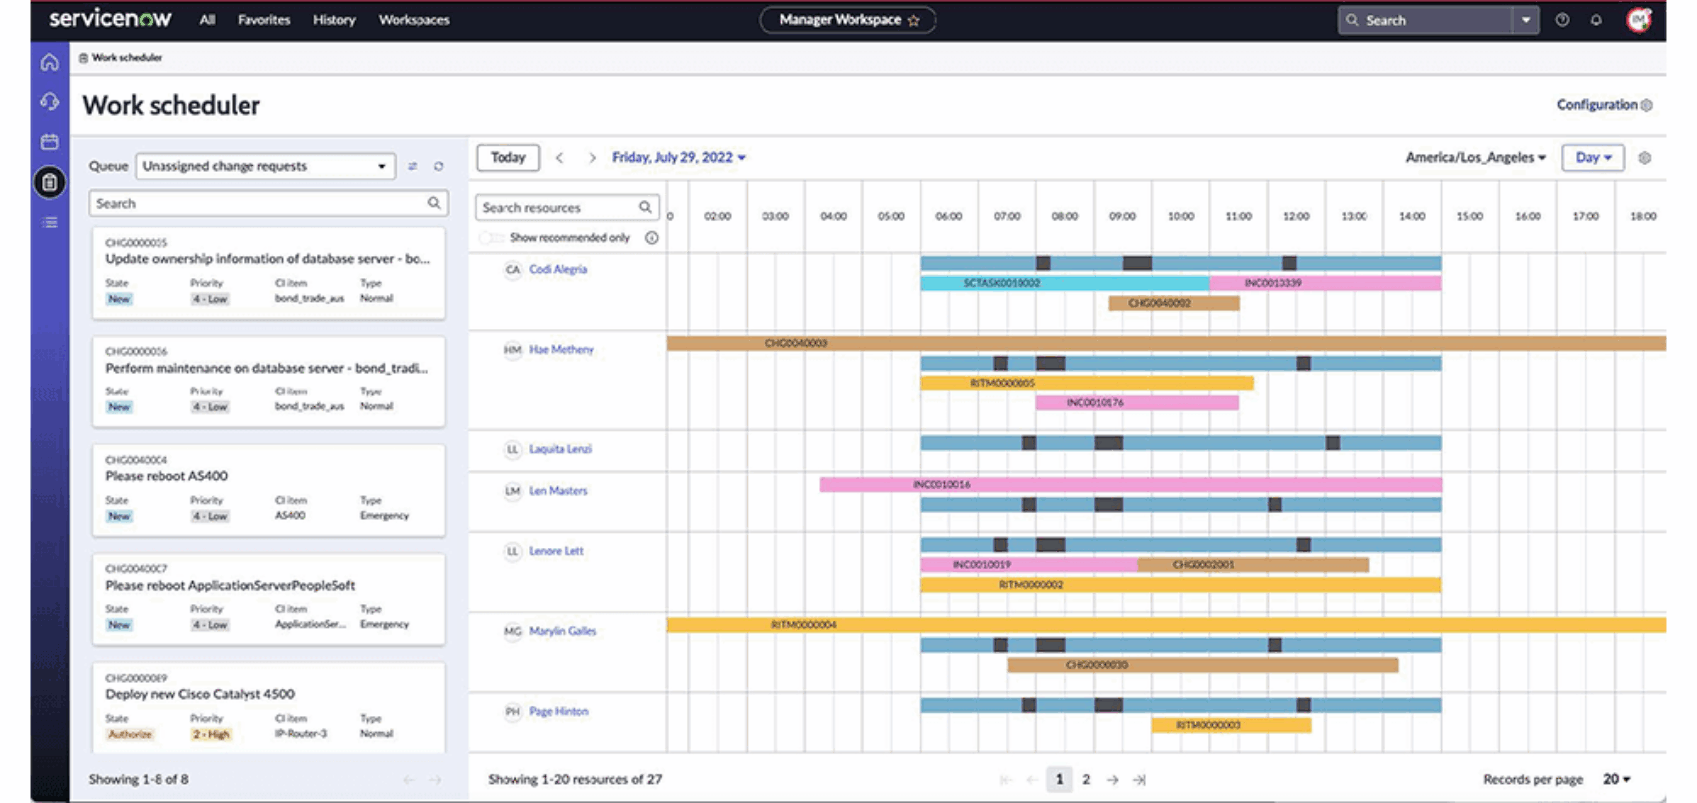 A screenshot from ServiceNow Workforce Optimisation showing the work scheduler view.